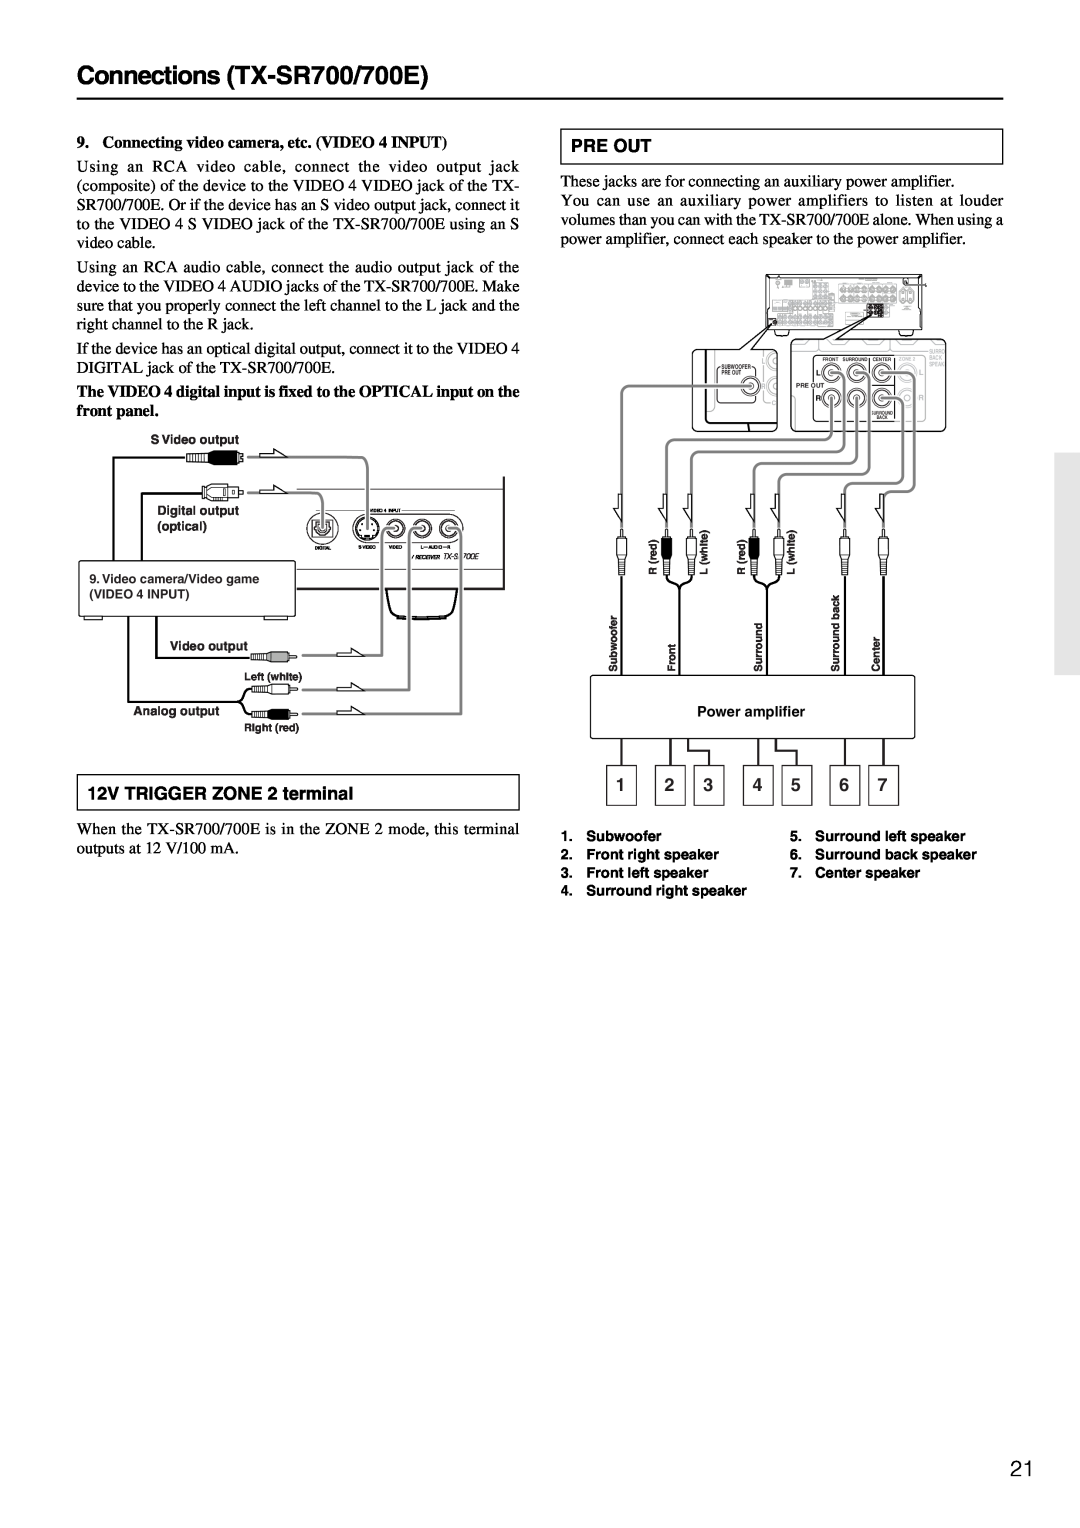 Onkyo TX-SR600/600E instruction manual Connections TX-SR700/700E, Pre Out, 12V TRIGGER ZONE 2 terminal 